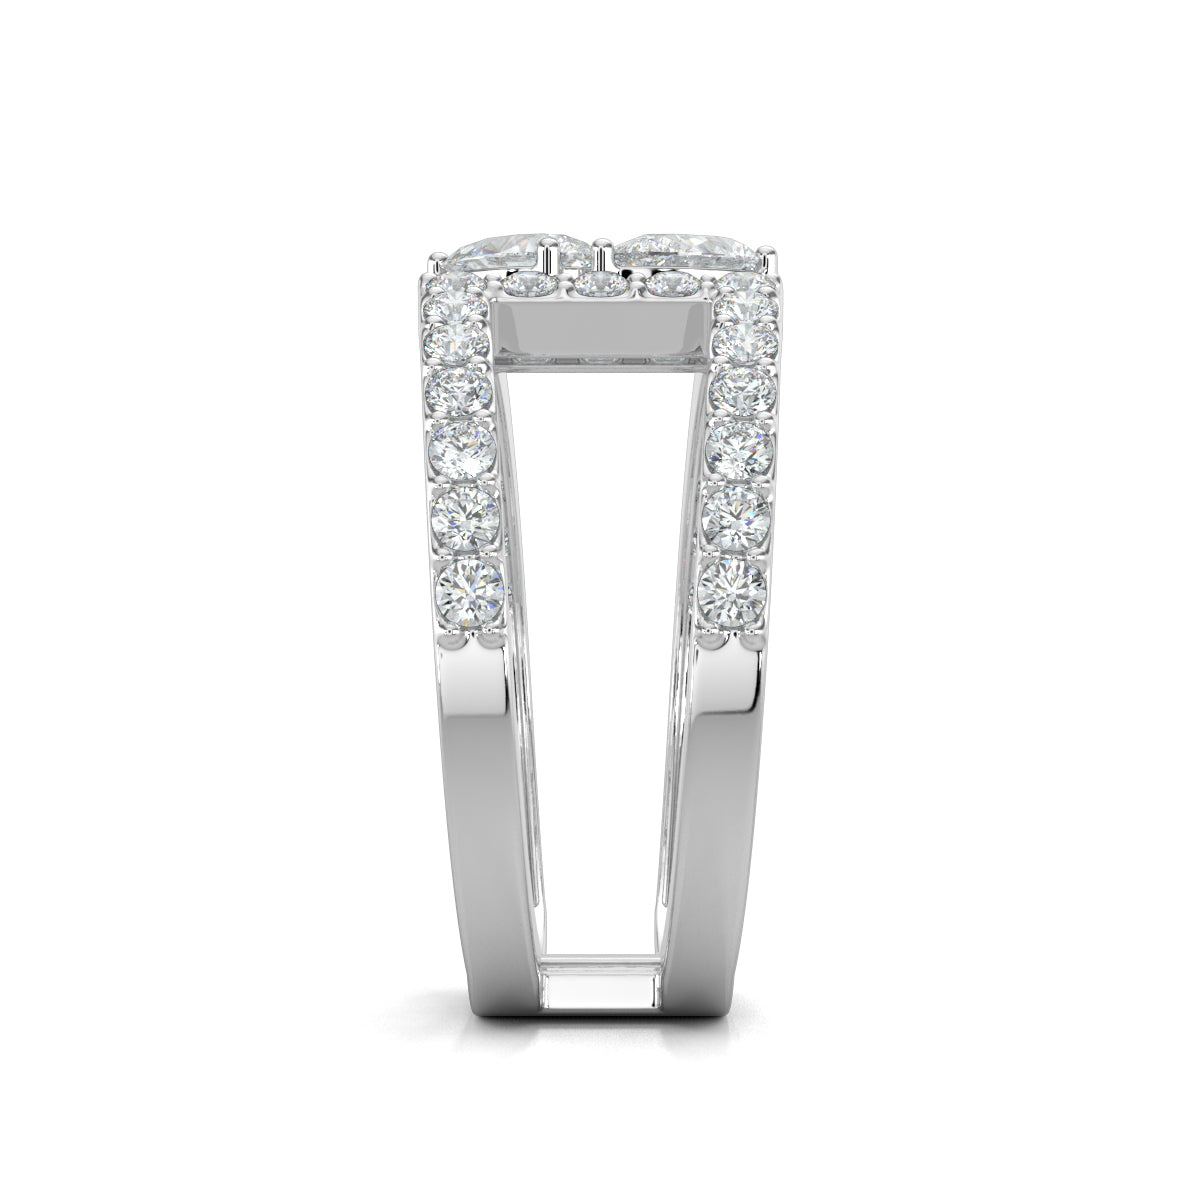 White Gold, Diamond Ring, Natural diamond duet ring, Lab-grown diamond duet ring, everyday diamond band, pave set diamond stack ring, pear diamond accent, elegant jewelry accessory